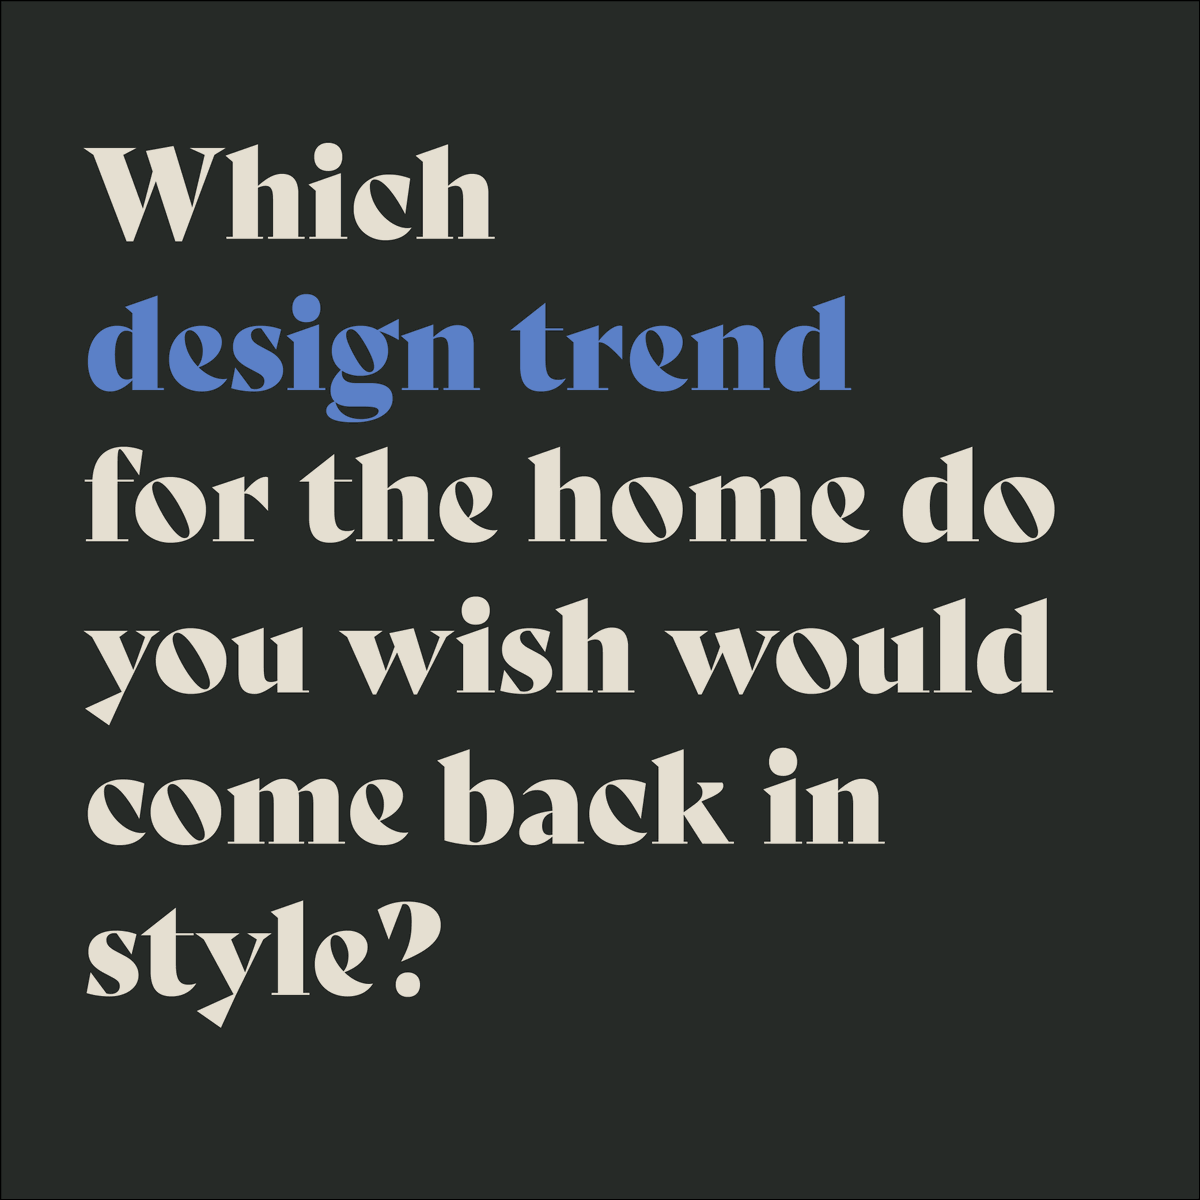 Every few years, old design trends come back! What design trend do you wish would come back in style?
#CbLakeOconee   #WhyGoAnywhereElse?     #TheBestWearBlue